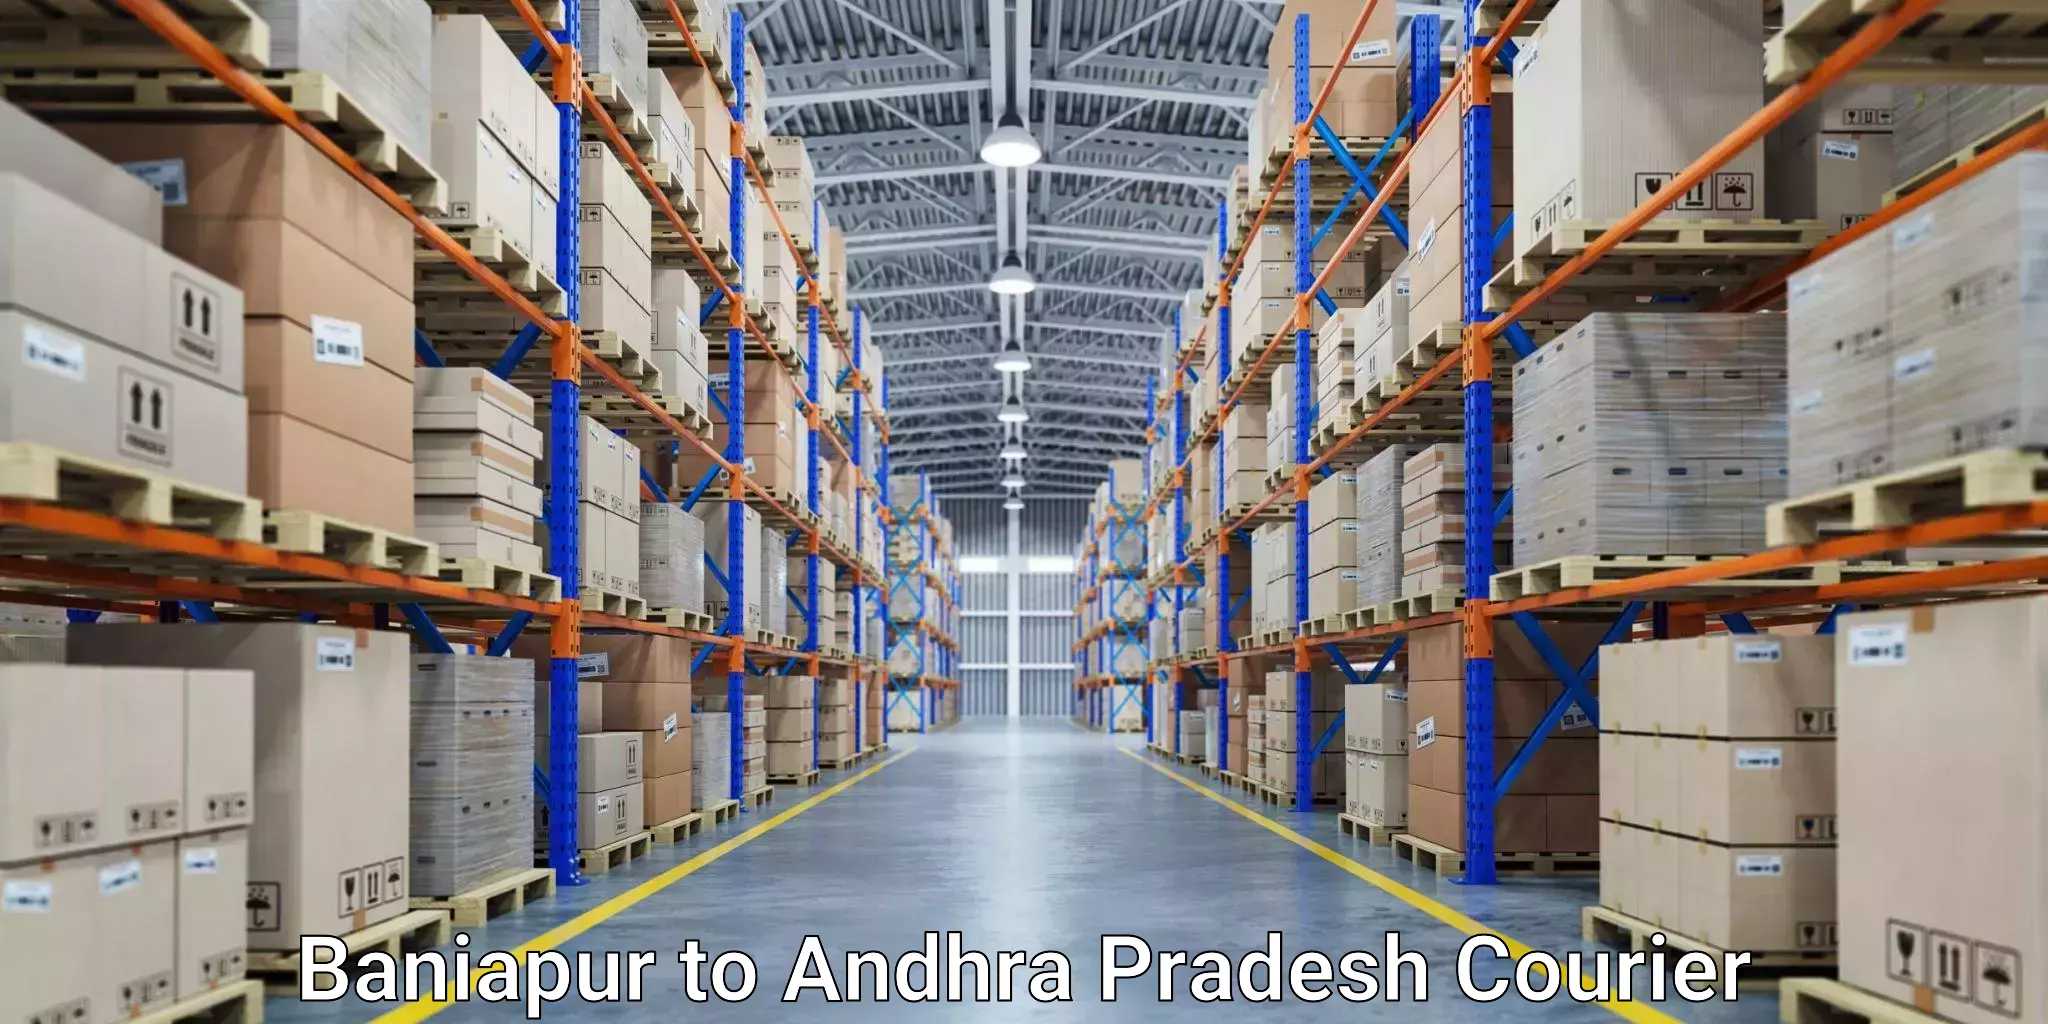 Courier service partnerships Baniapur to Andhra Pradesh